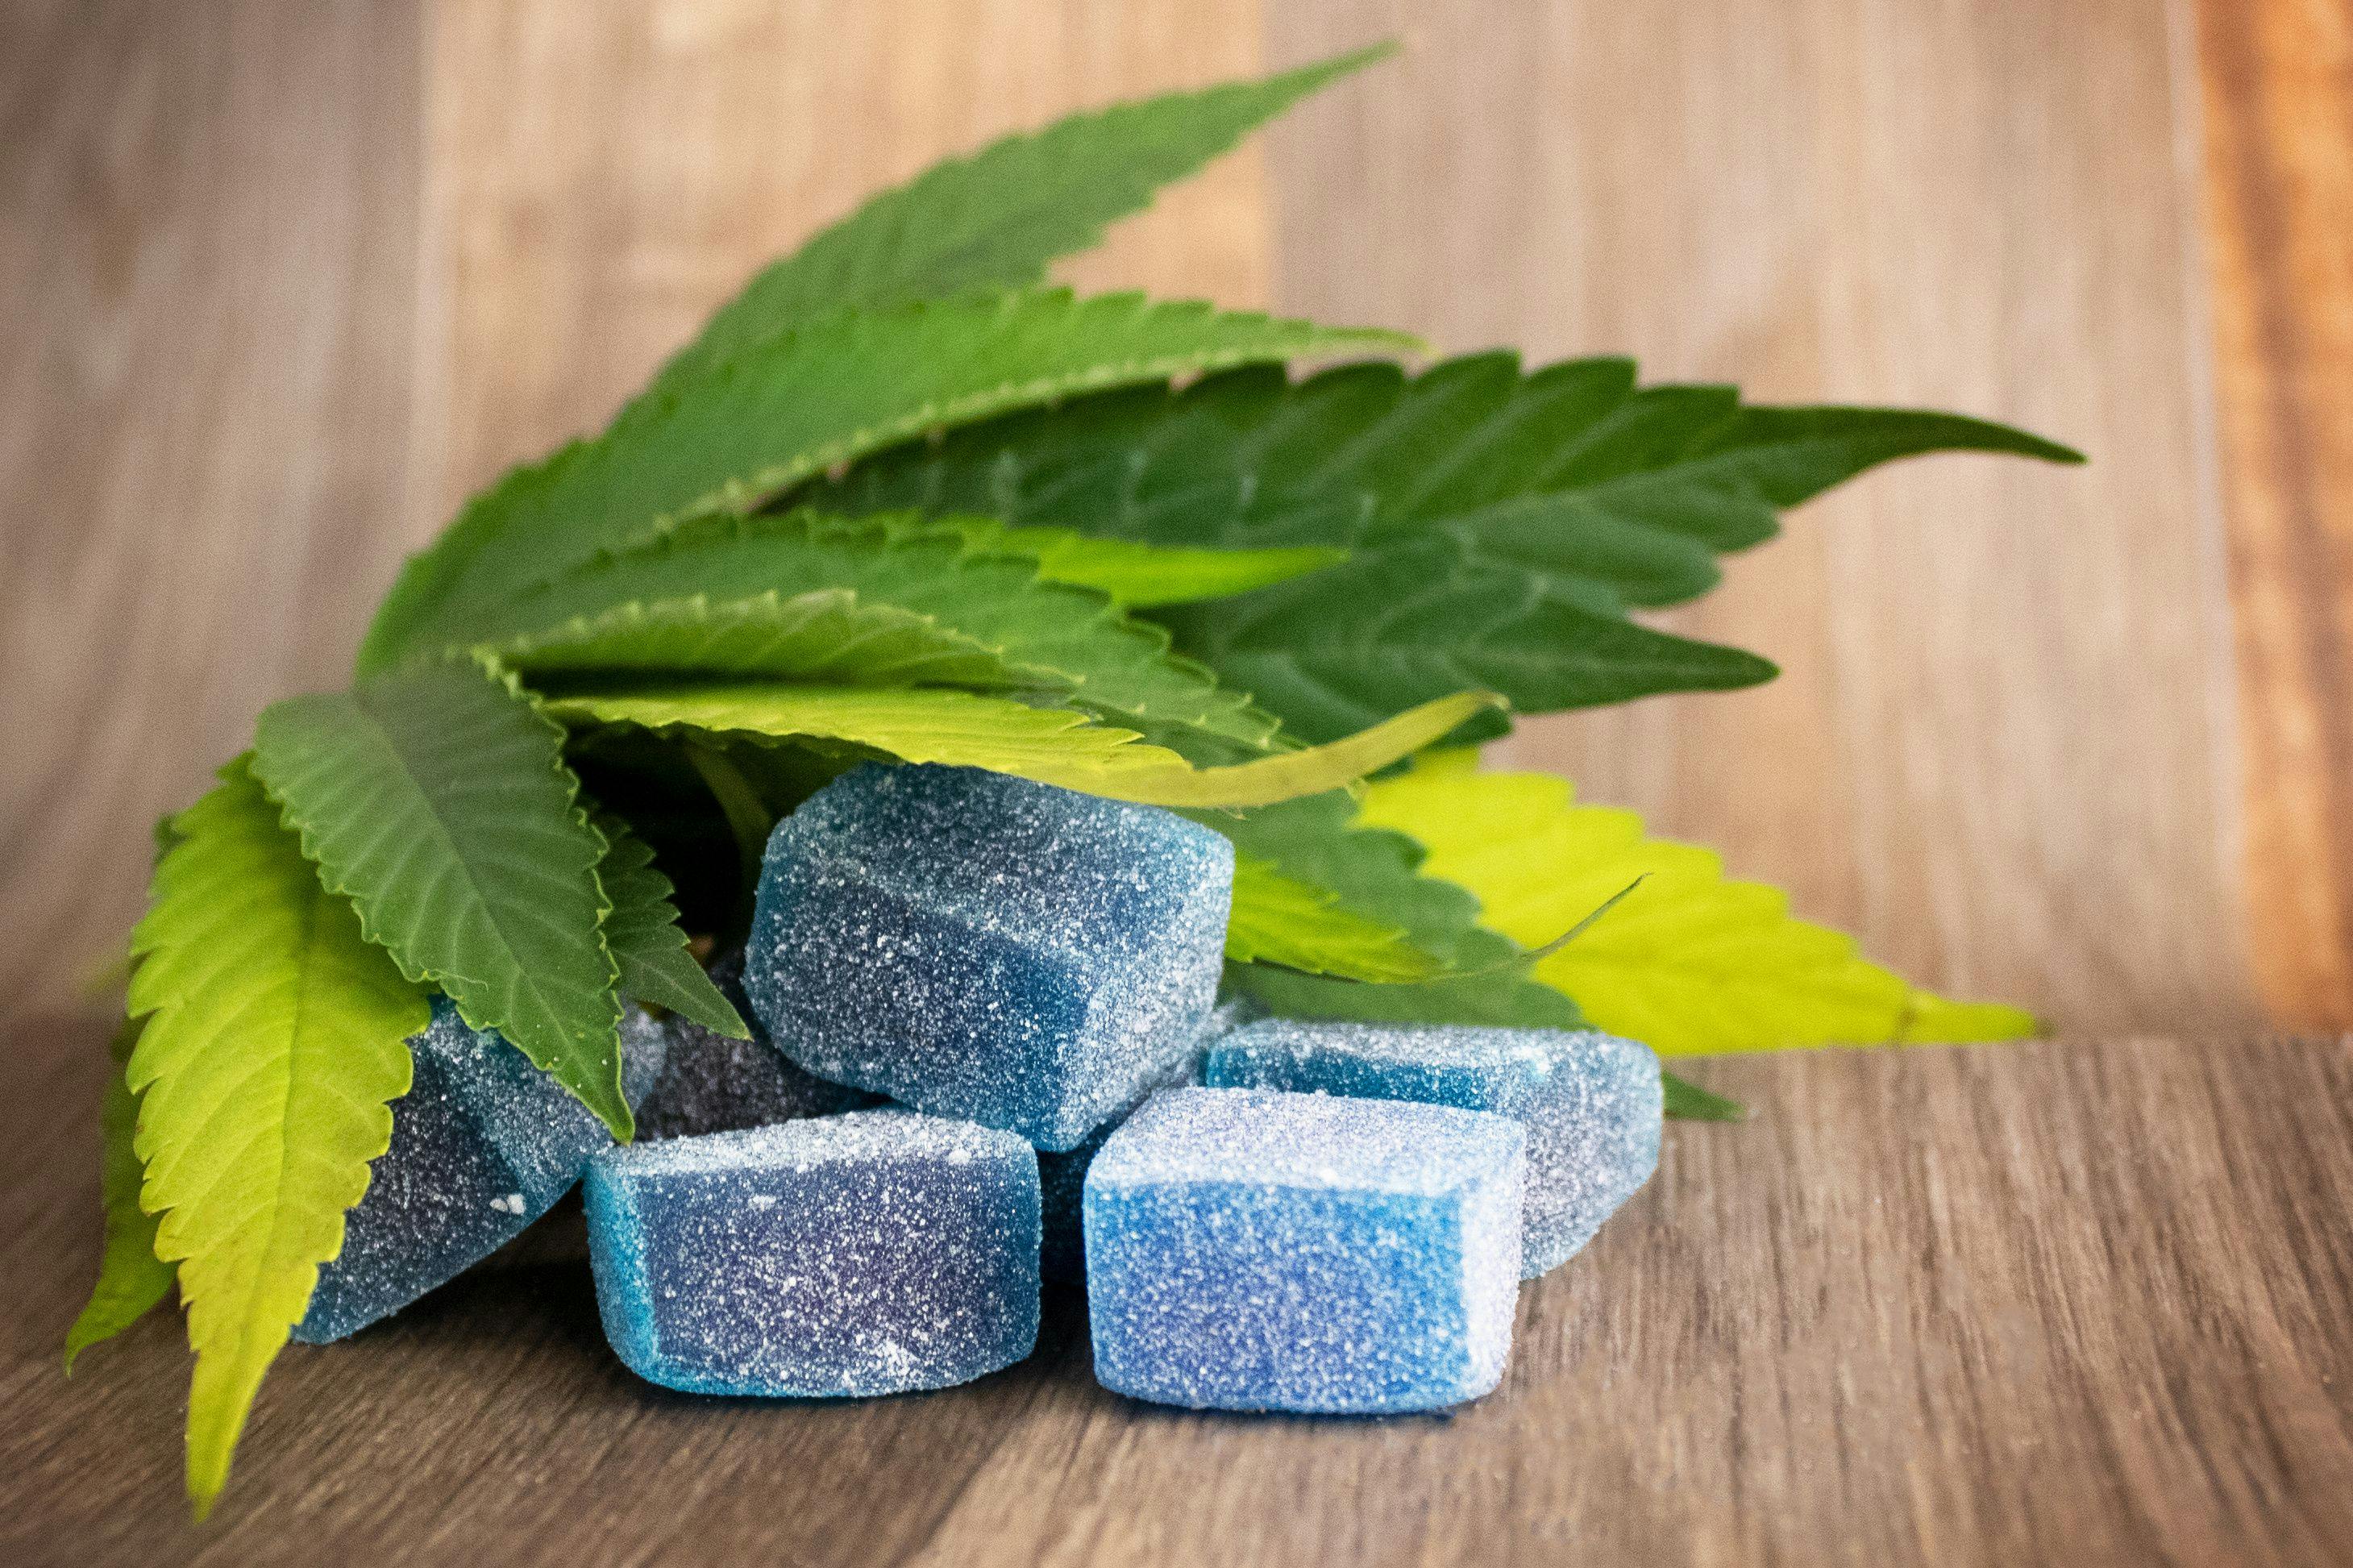 cannabis gummies edibles | Image Credit: Ryan - stock.adobe.com